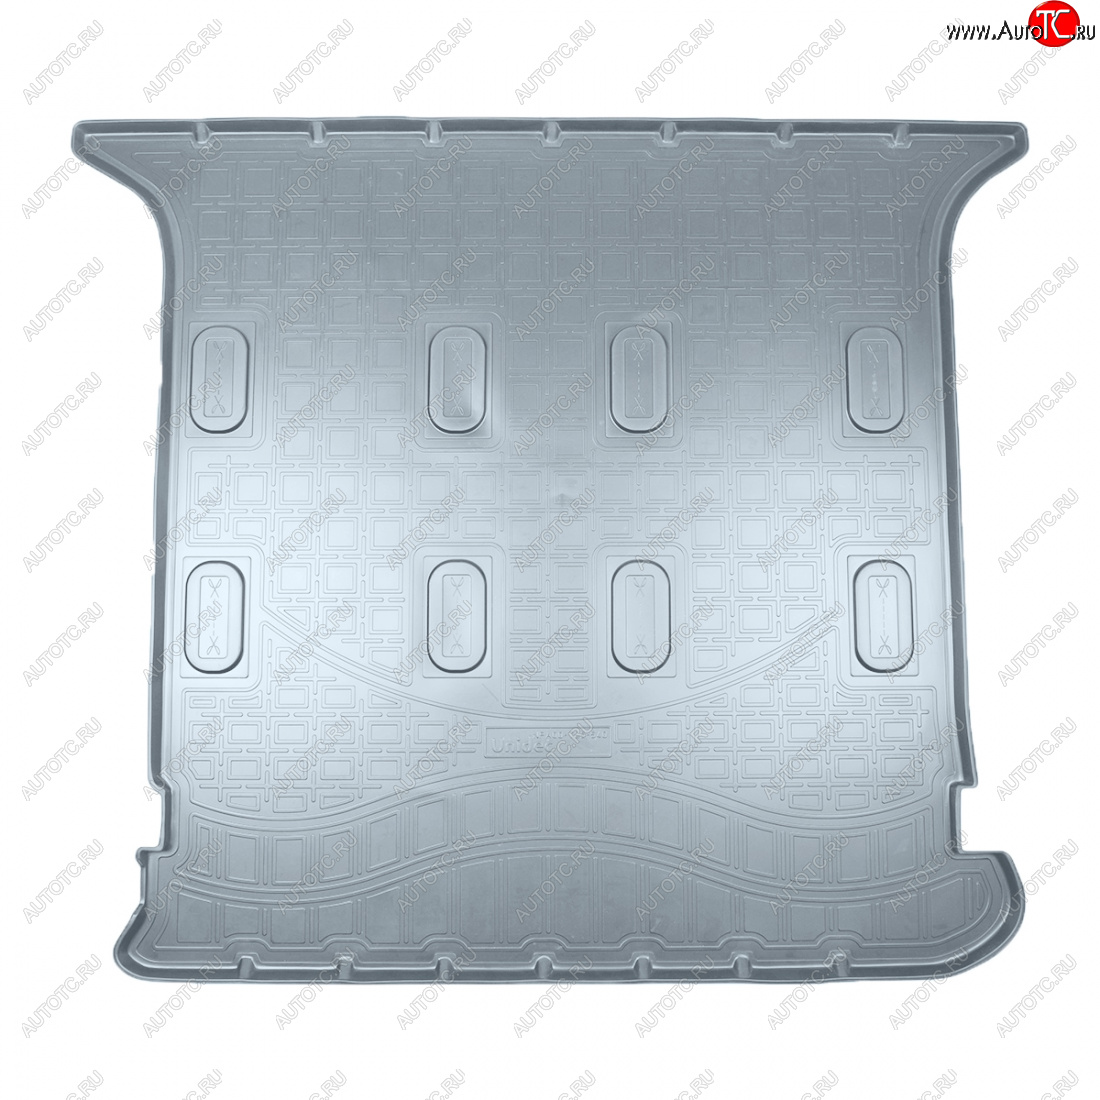 2 759 р. Коврик багажника Norplast Unidec (5 мест)  Seat Alhambra  7M (1996-2010) (серый)